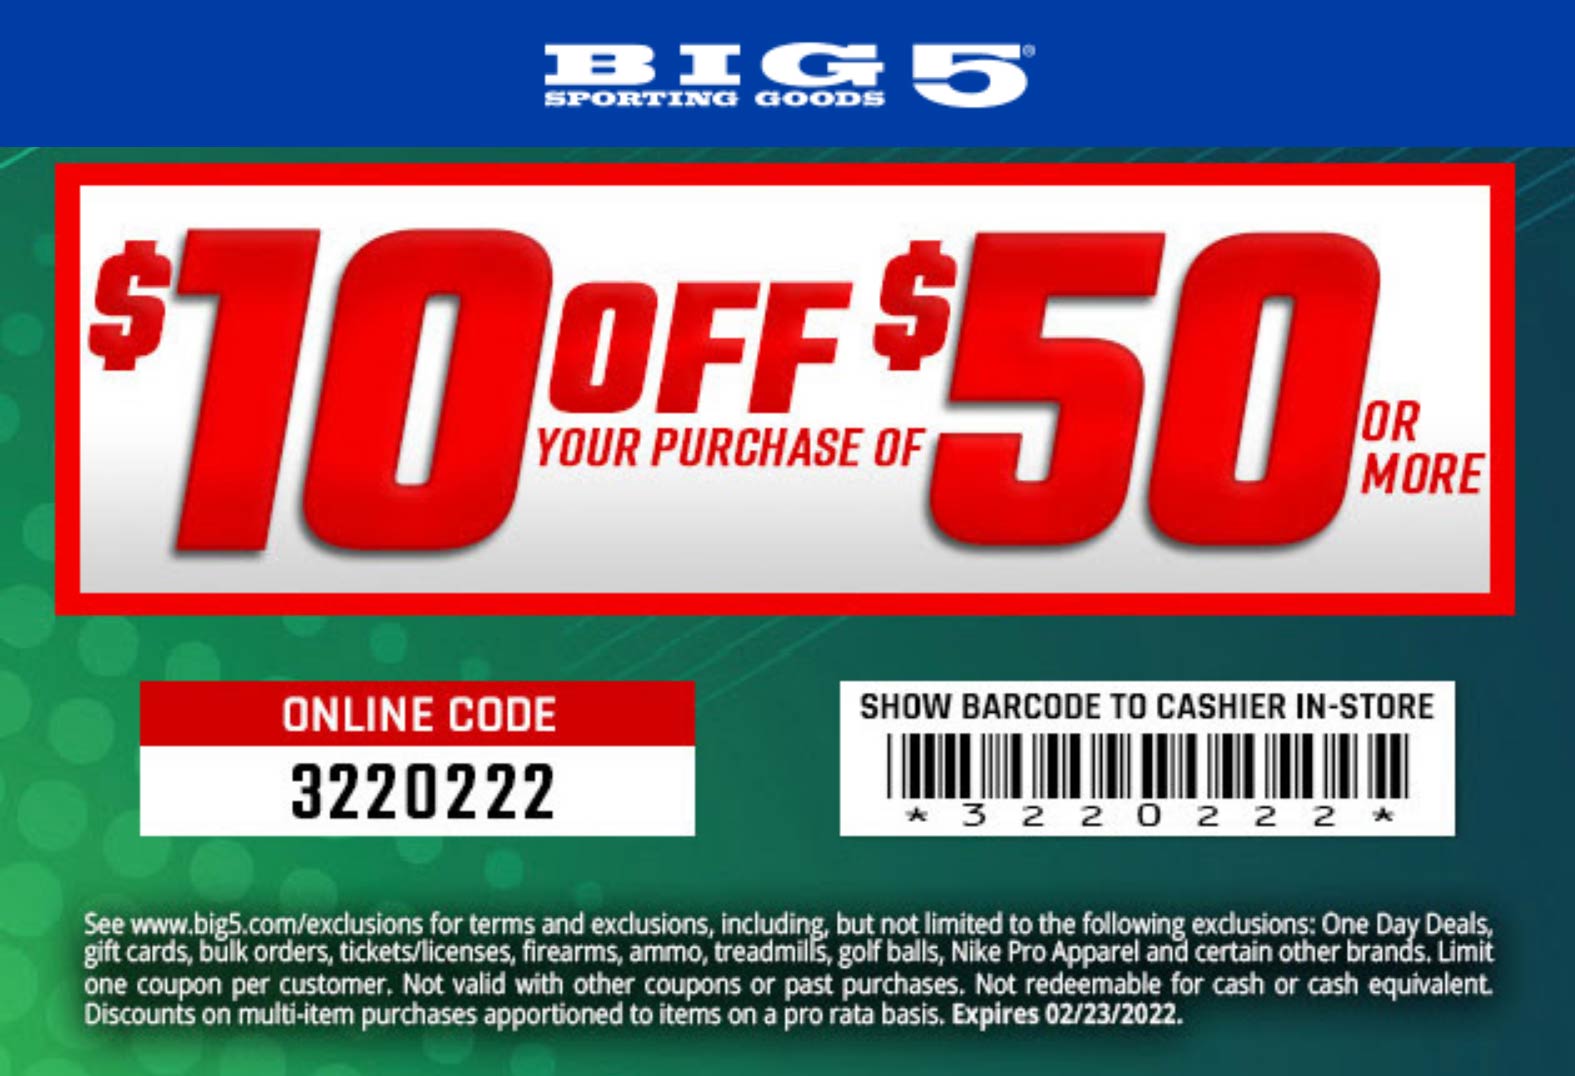 Big 5 stores Coupon  $10 off $50 at Big 5 sporting goods, or online via promo code 3220222 #big5 